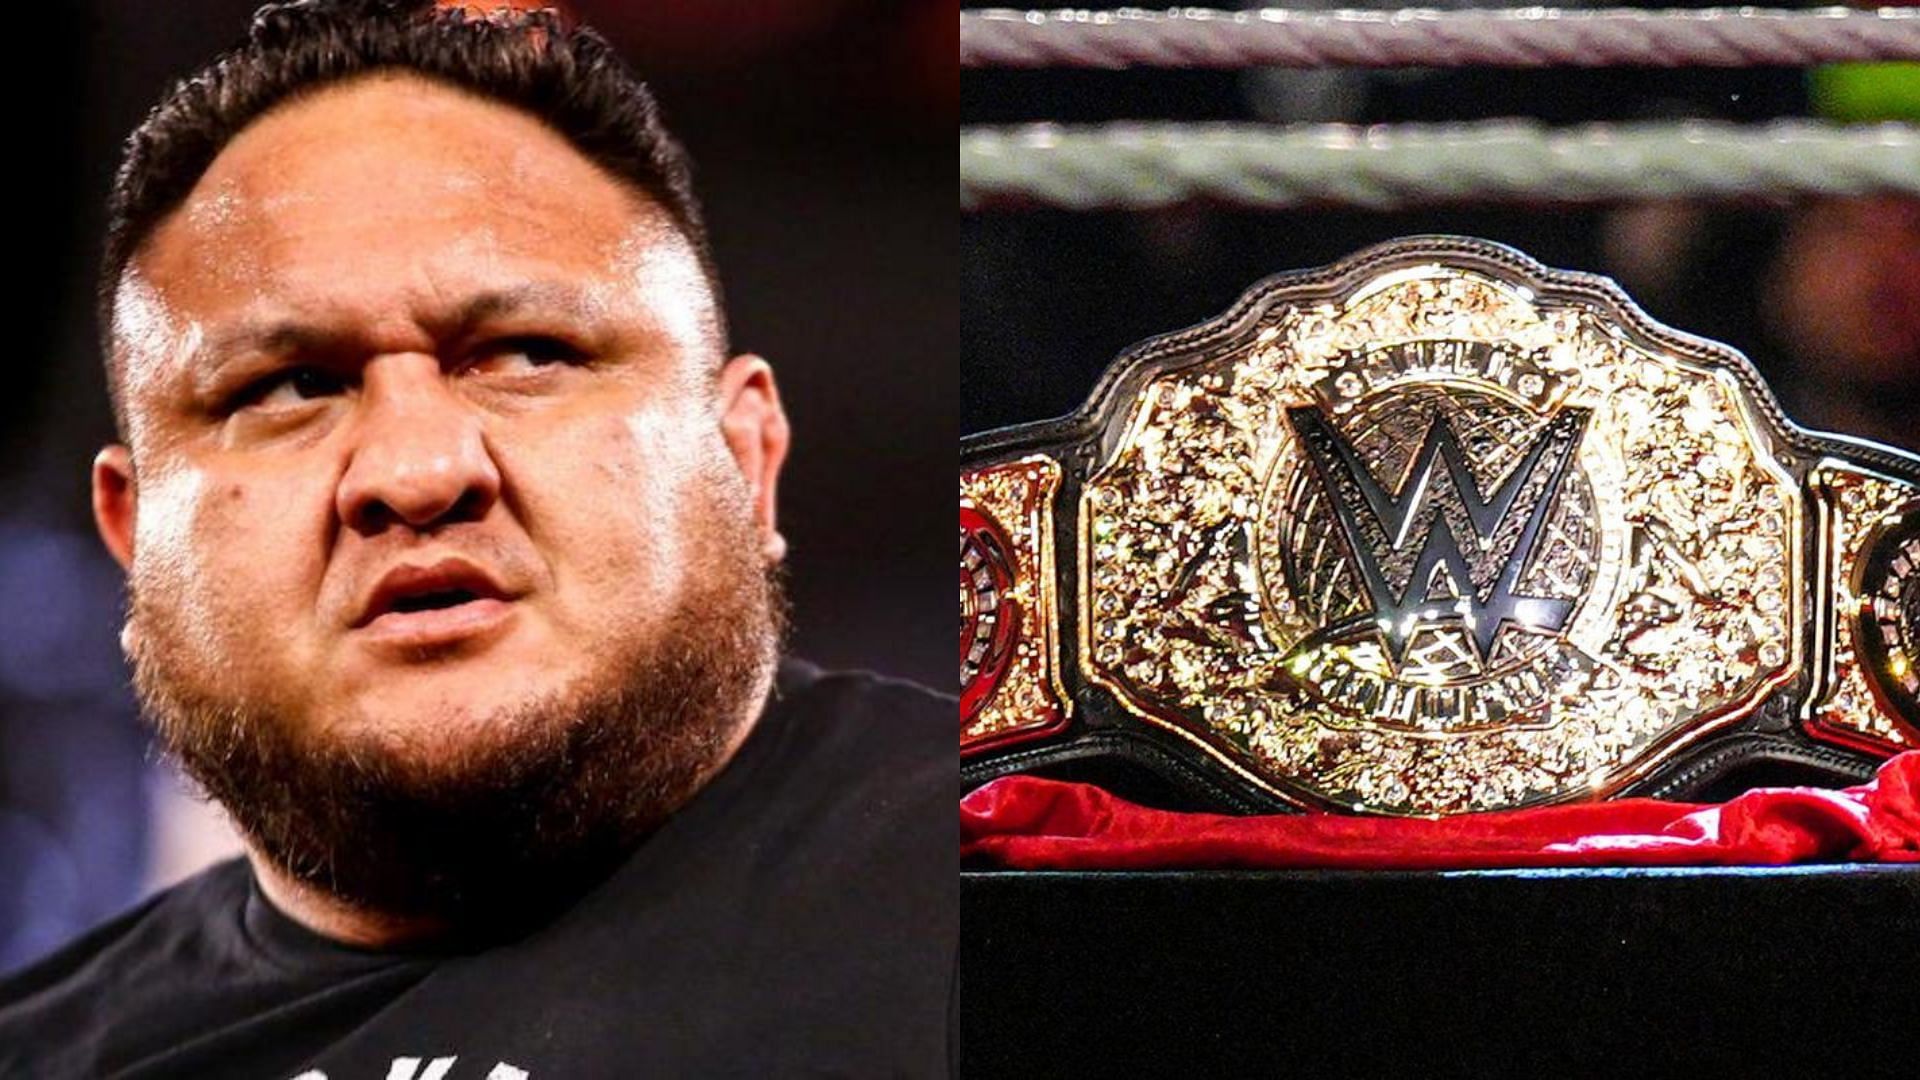 Samoa Joe is the current ROH TV Champion